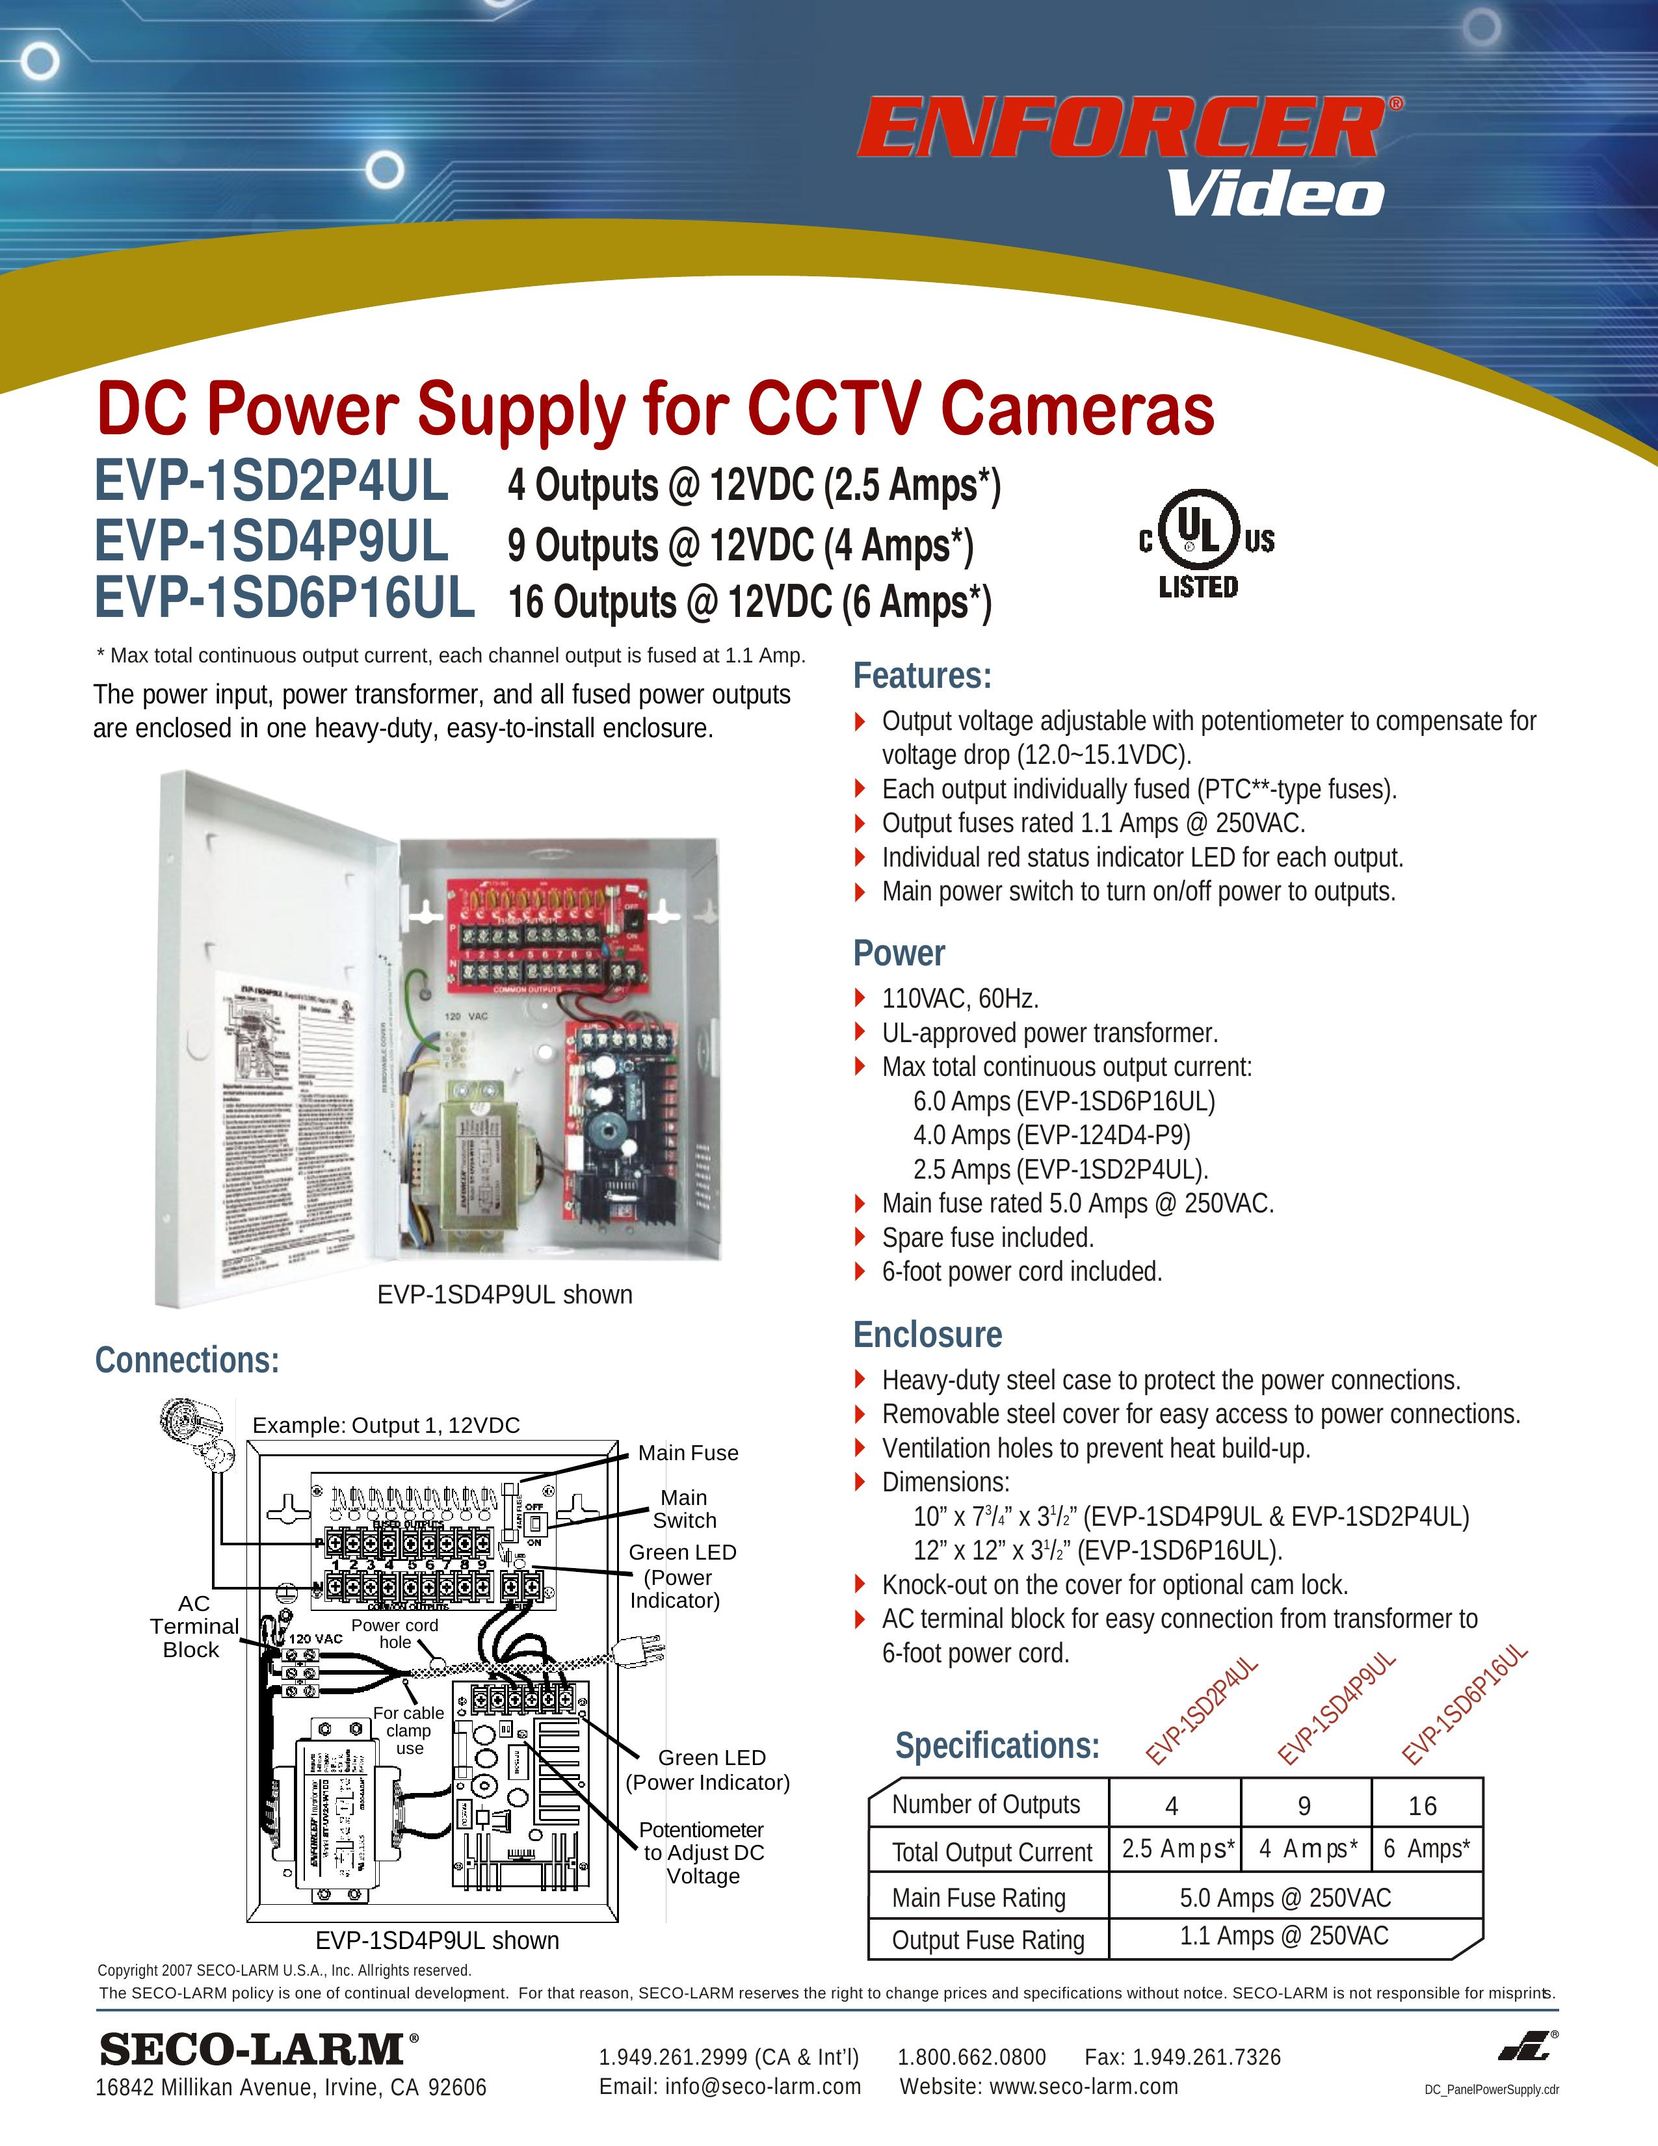 SECO-LARM USA EVP-1SD2P4UL Power Supply User Manual